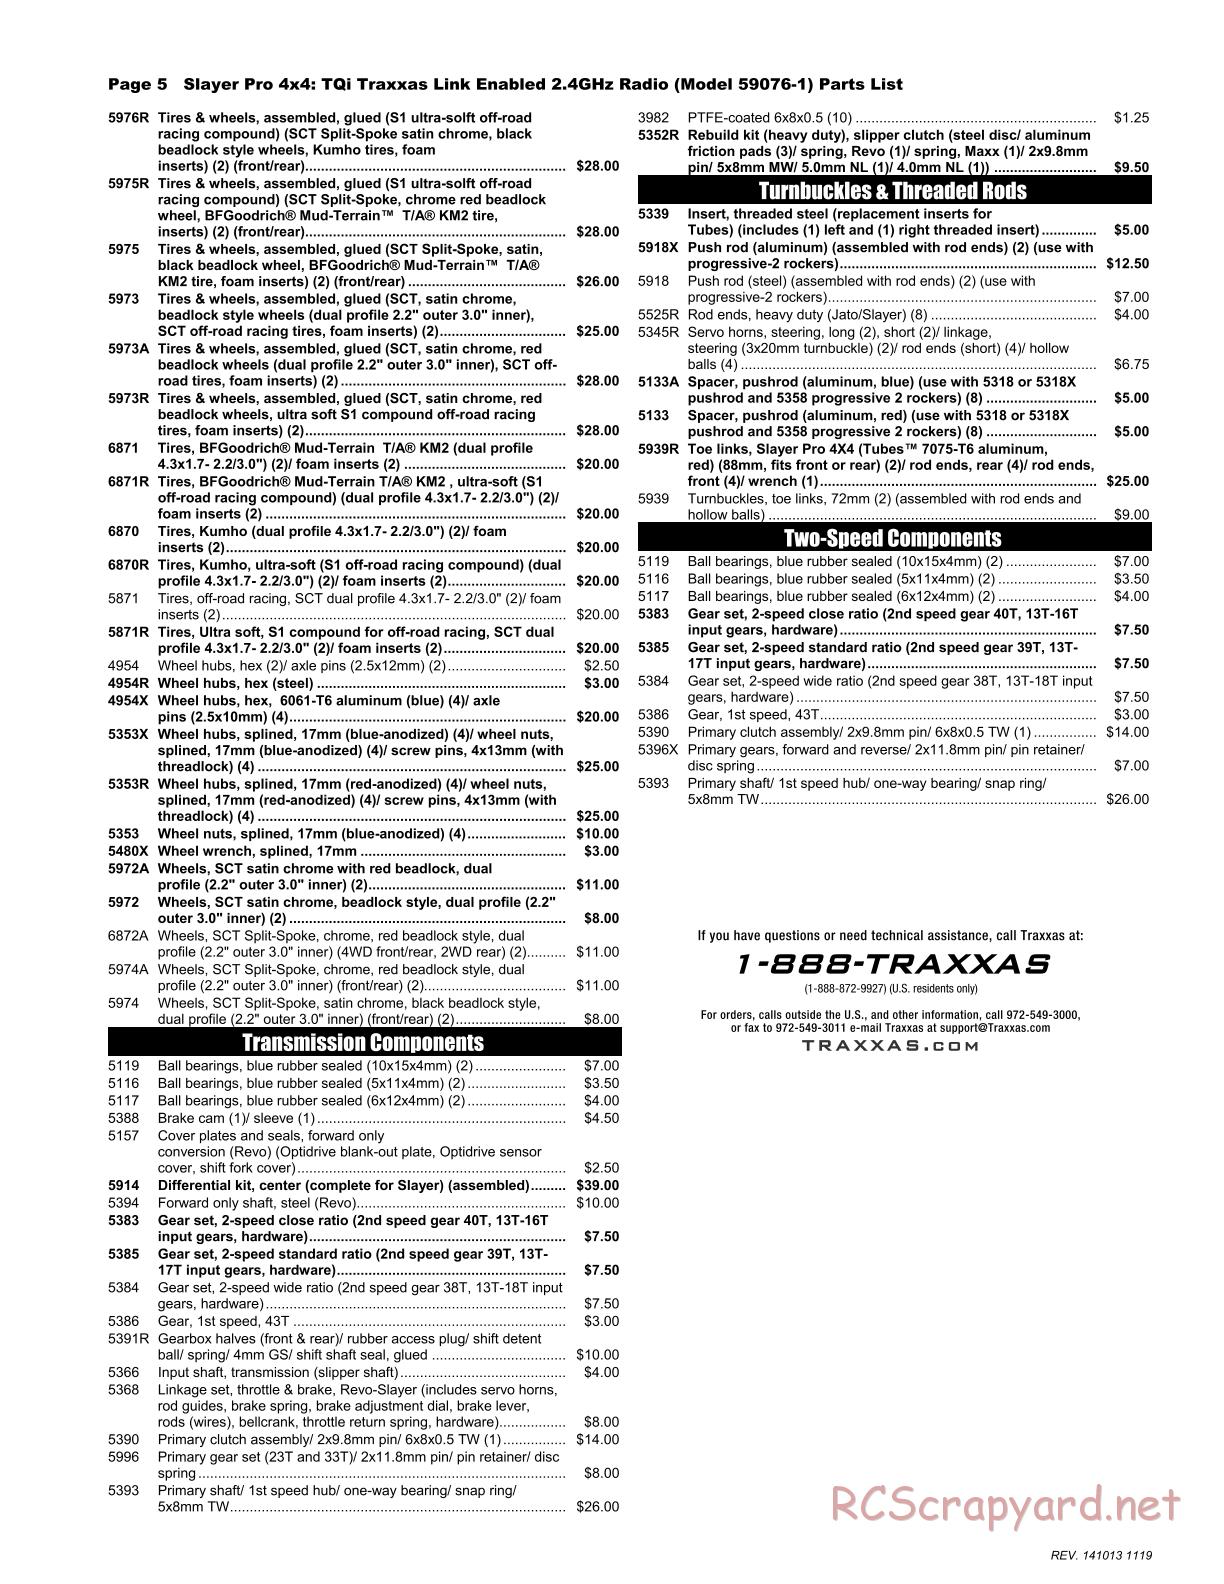 Traxxas - Slayer Pro 4x4 (2014) - Parts List - Page 5